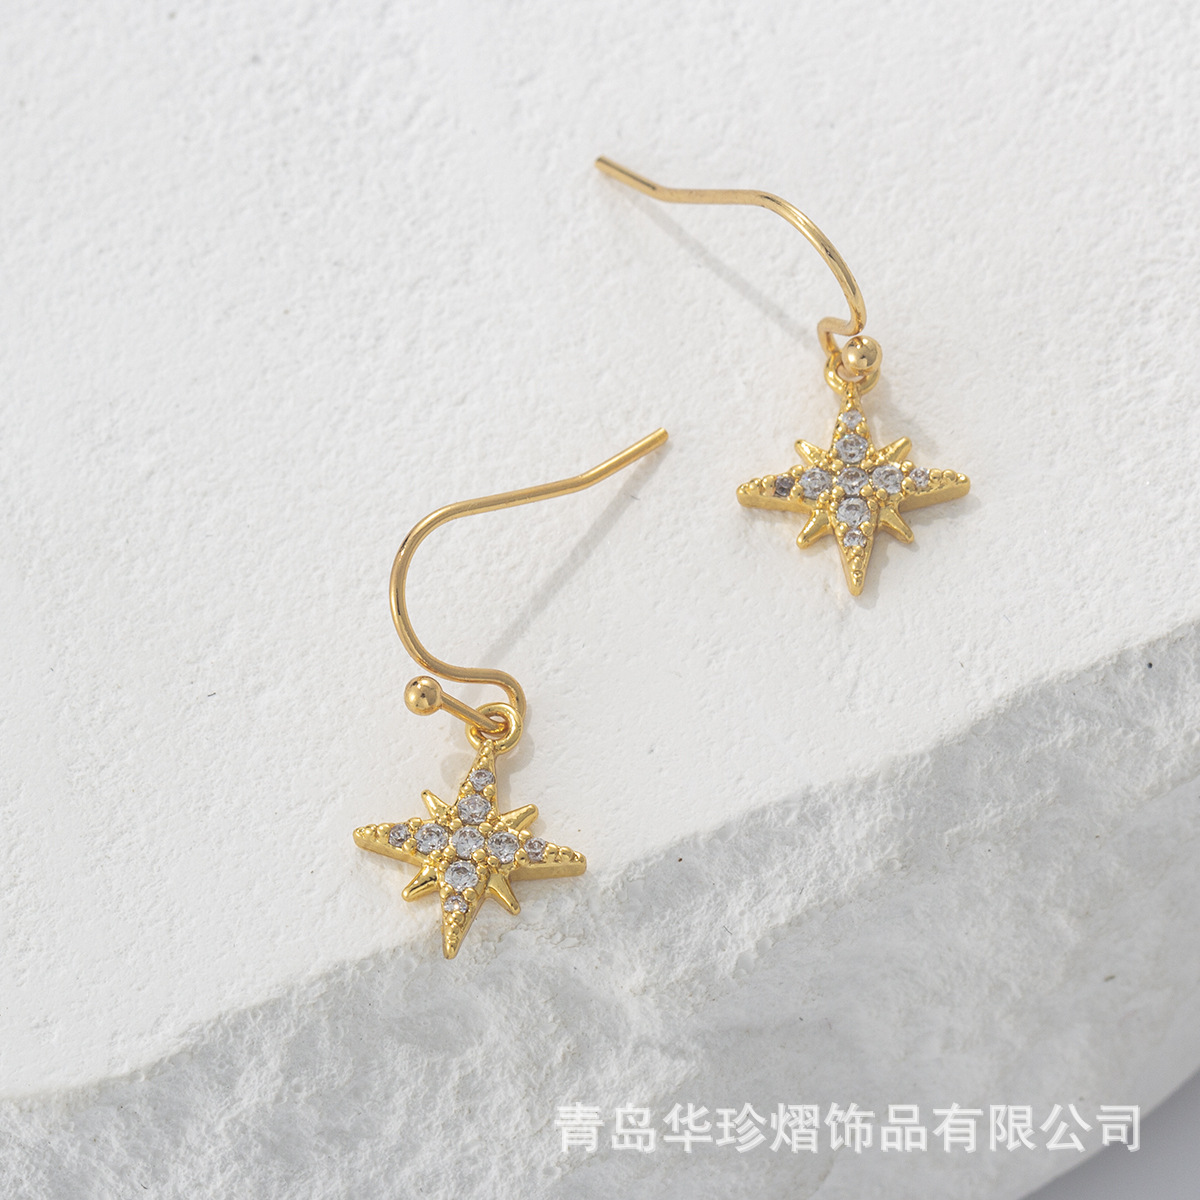 Qingdao Jewelry Factory Earrings Fashionable, Light Luxury, High Grade, Zircon Star Earrings, Fresh and Sweet Electroplated Earrings for Women